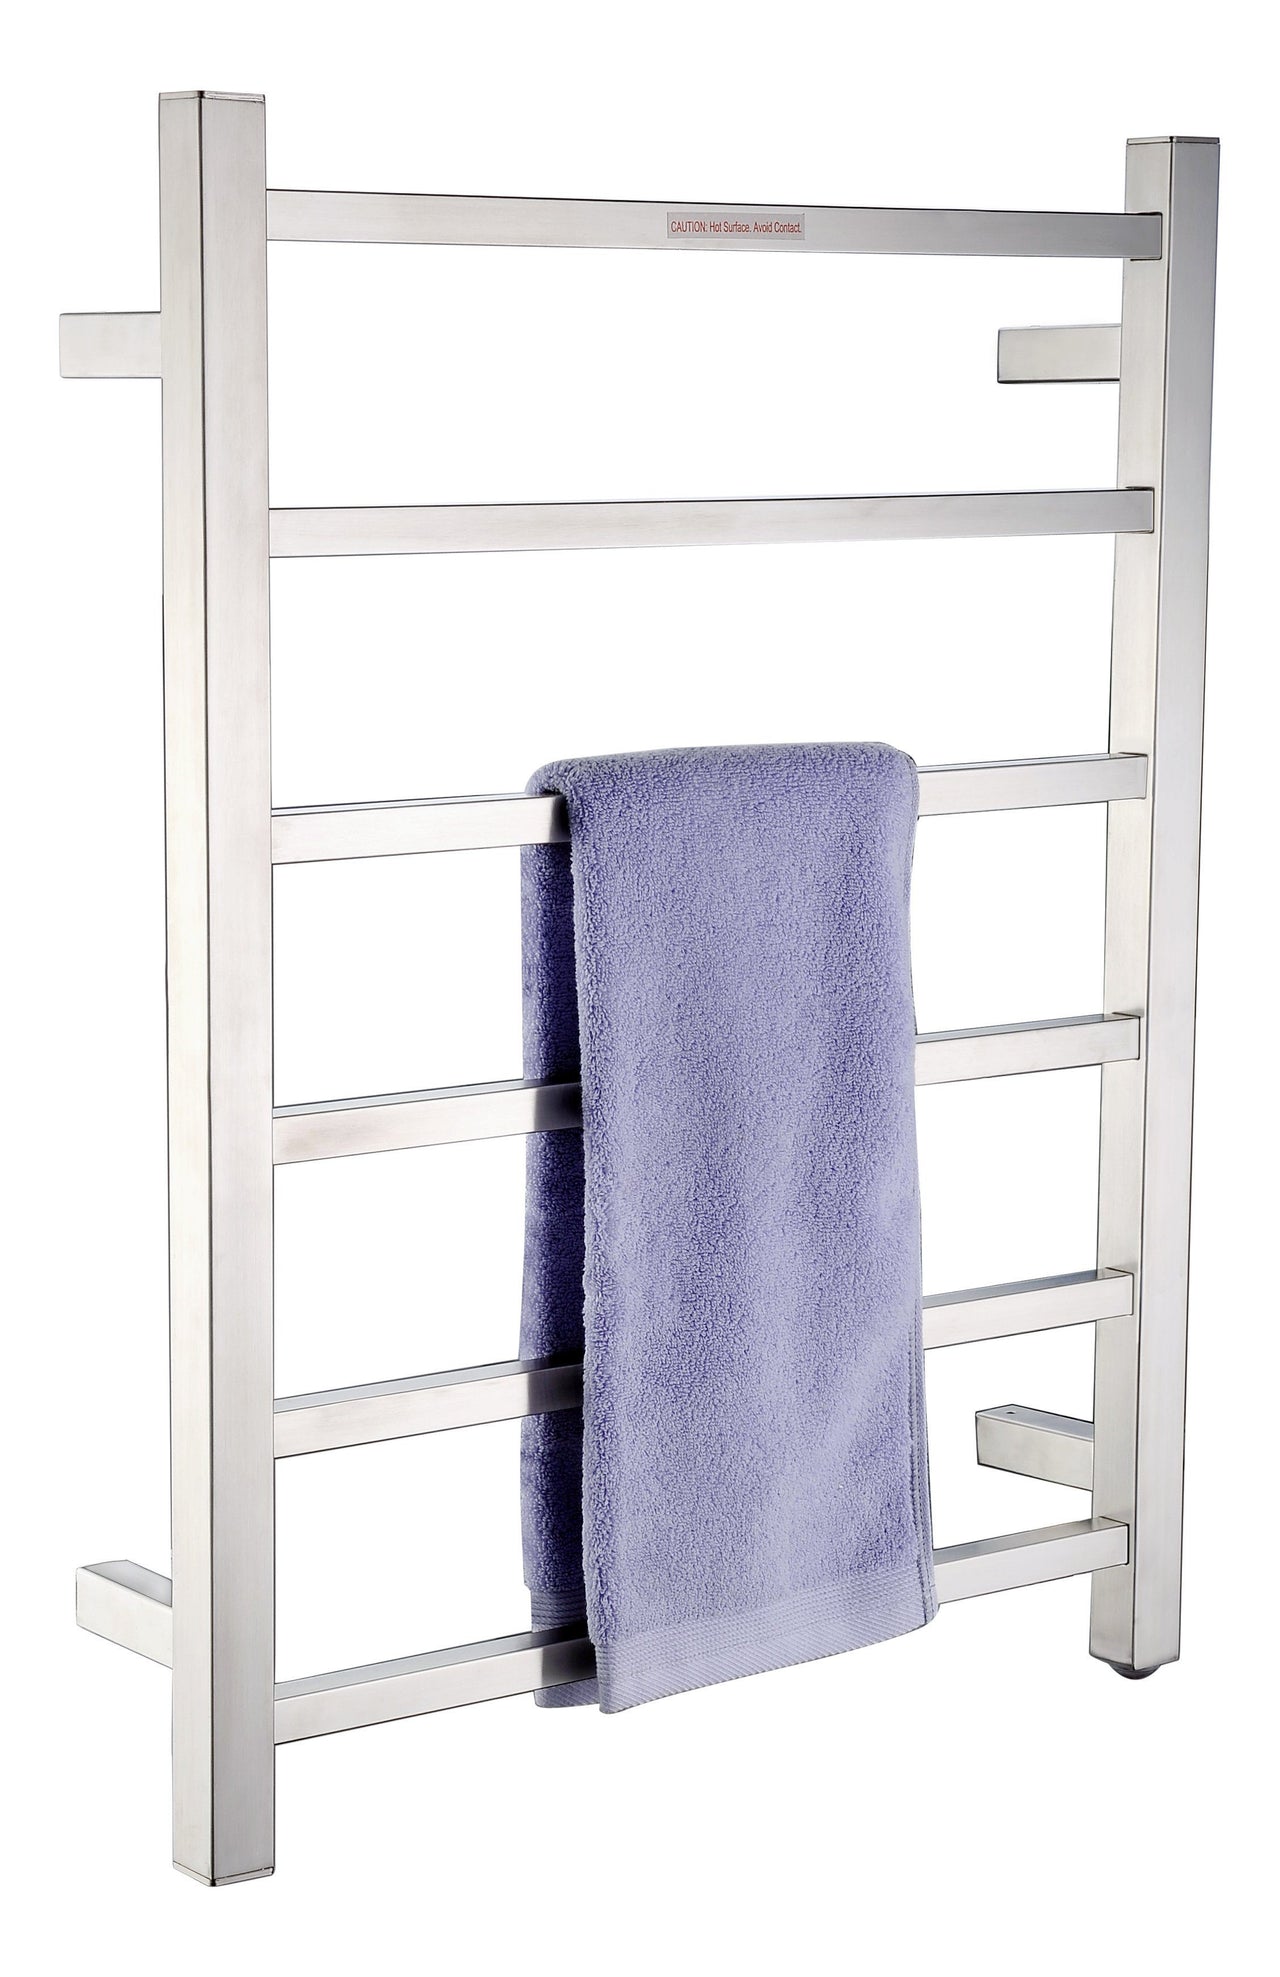 ANZZI Charles Series TW-AZ014BN Towel Warmers Towel Warmers ANZZI 